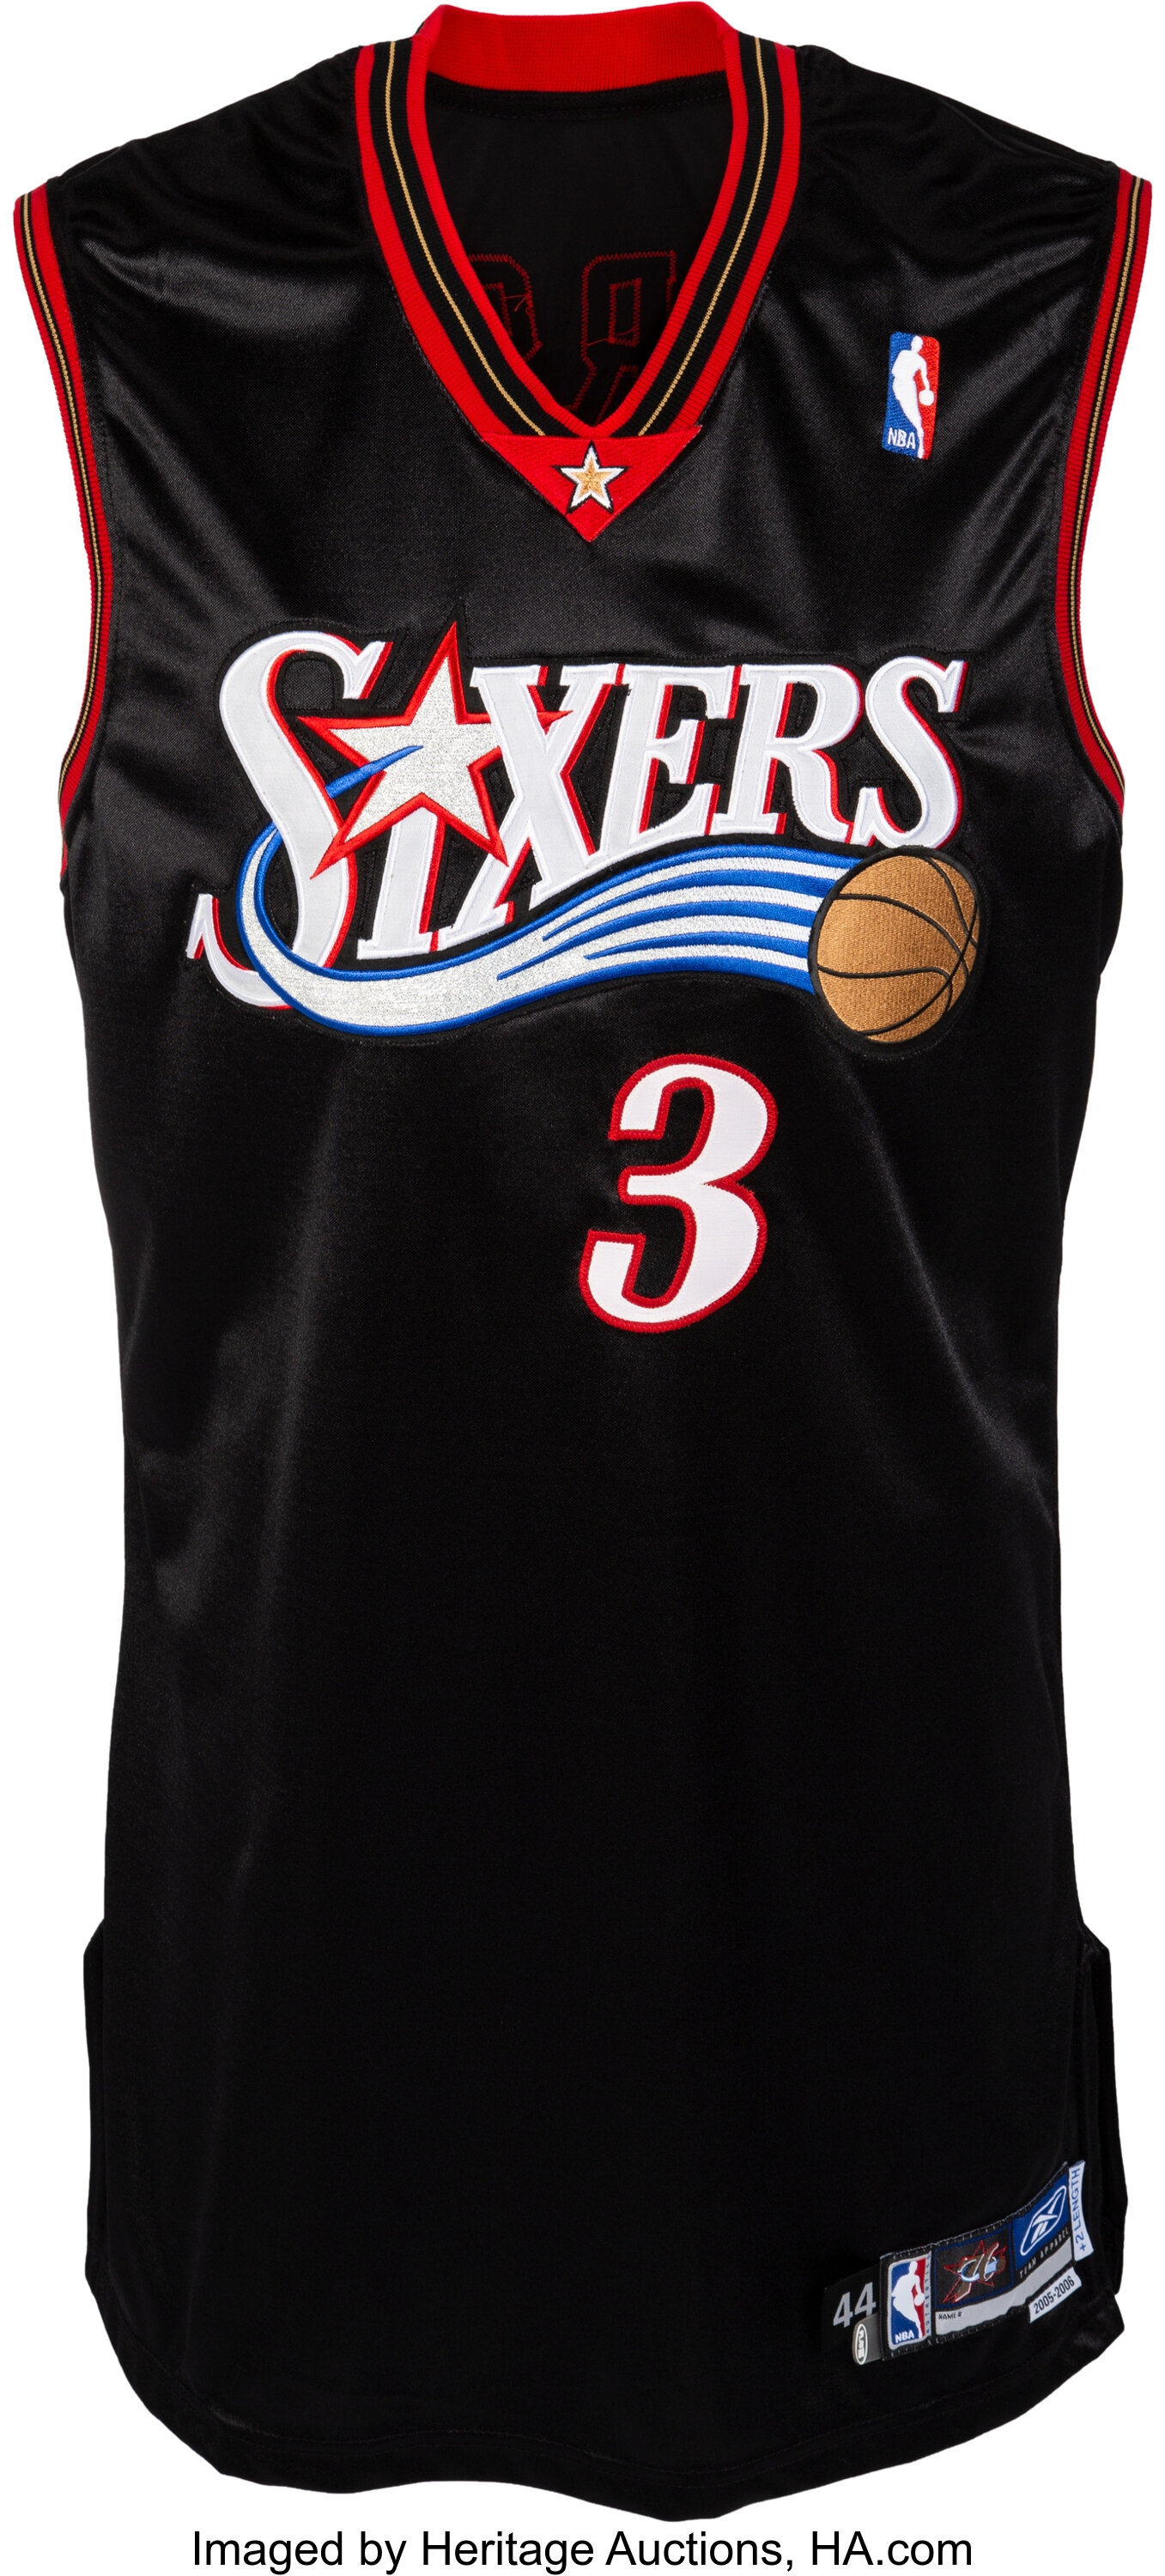 Allen Iverson 44 Size NBA Jerseys for sale